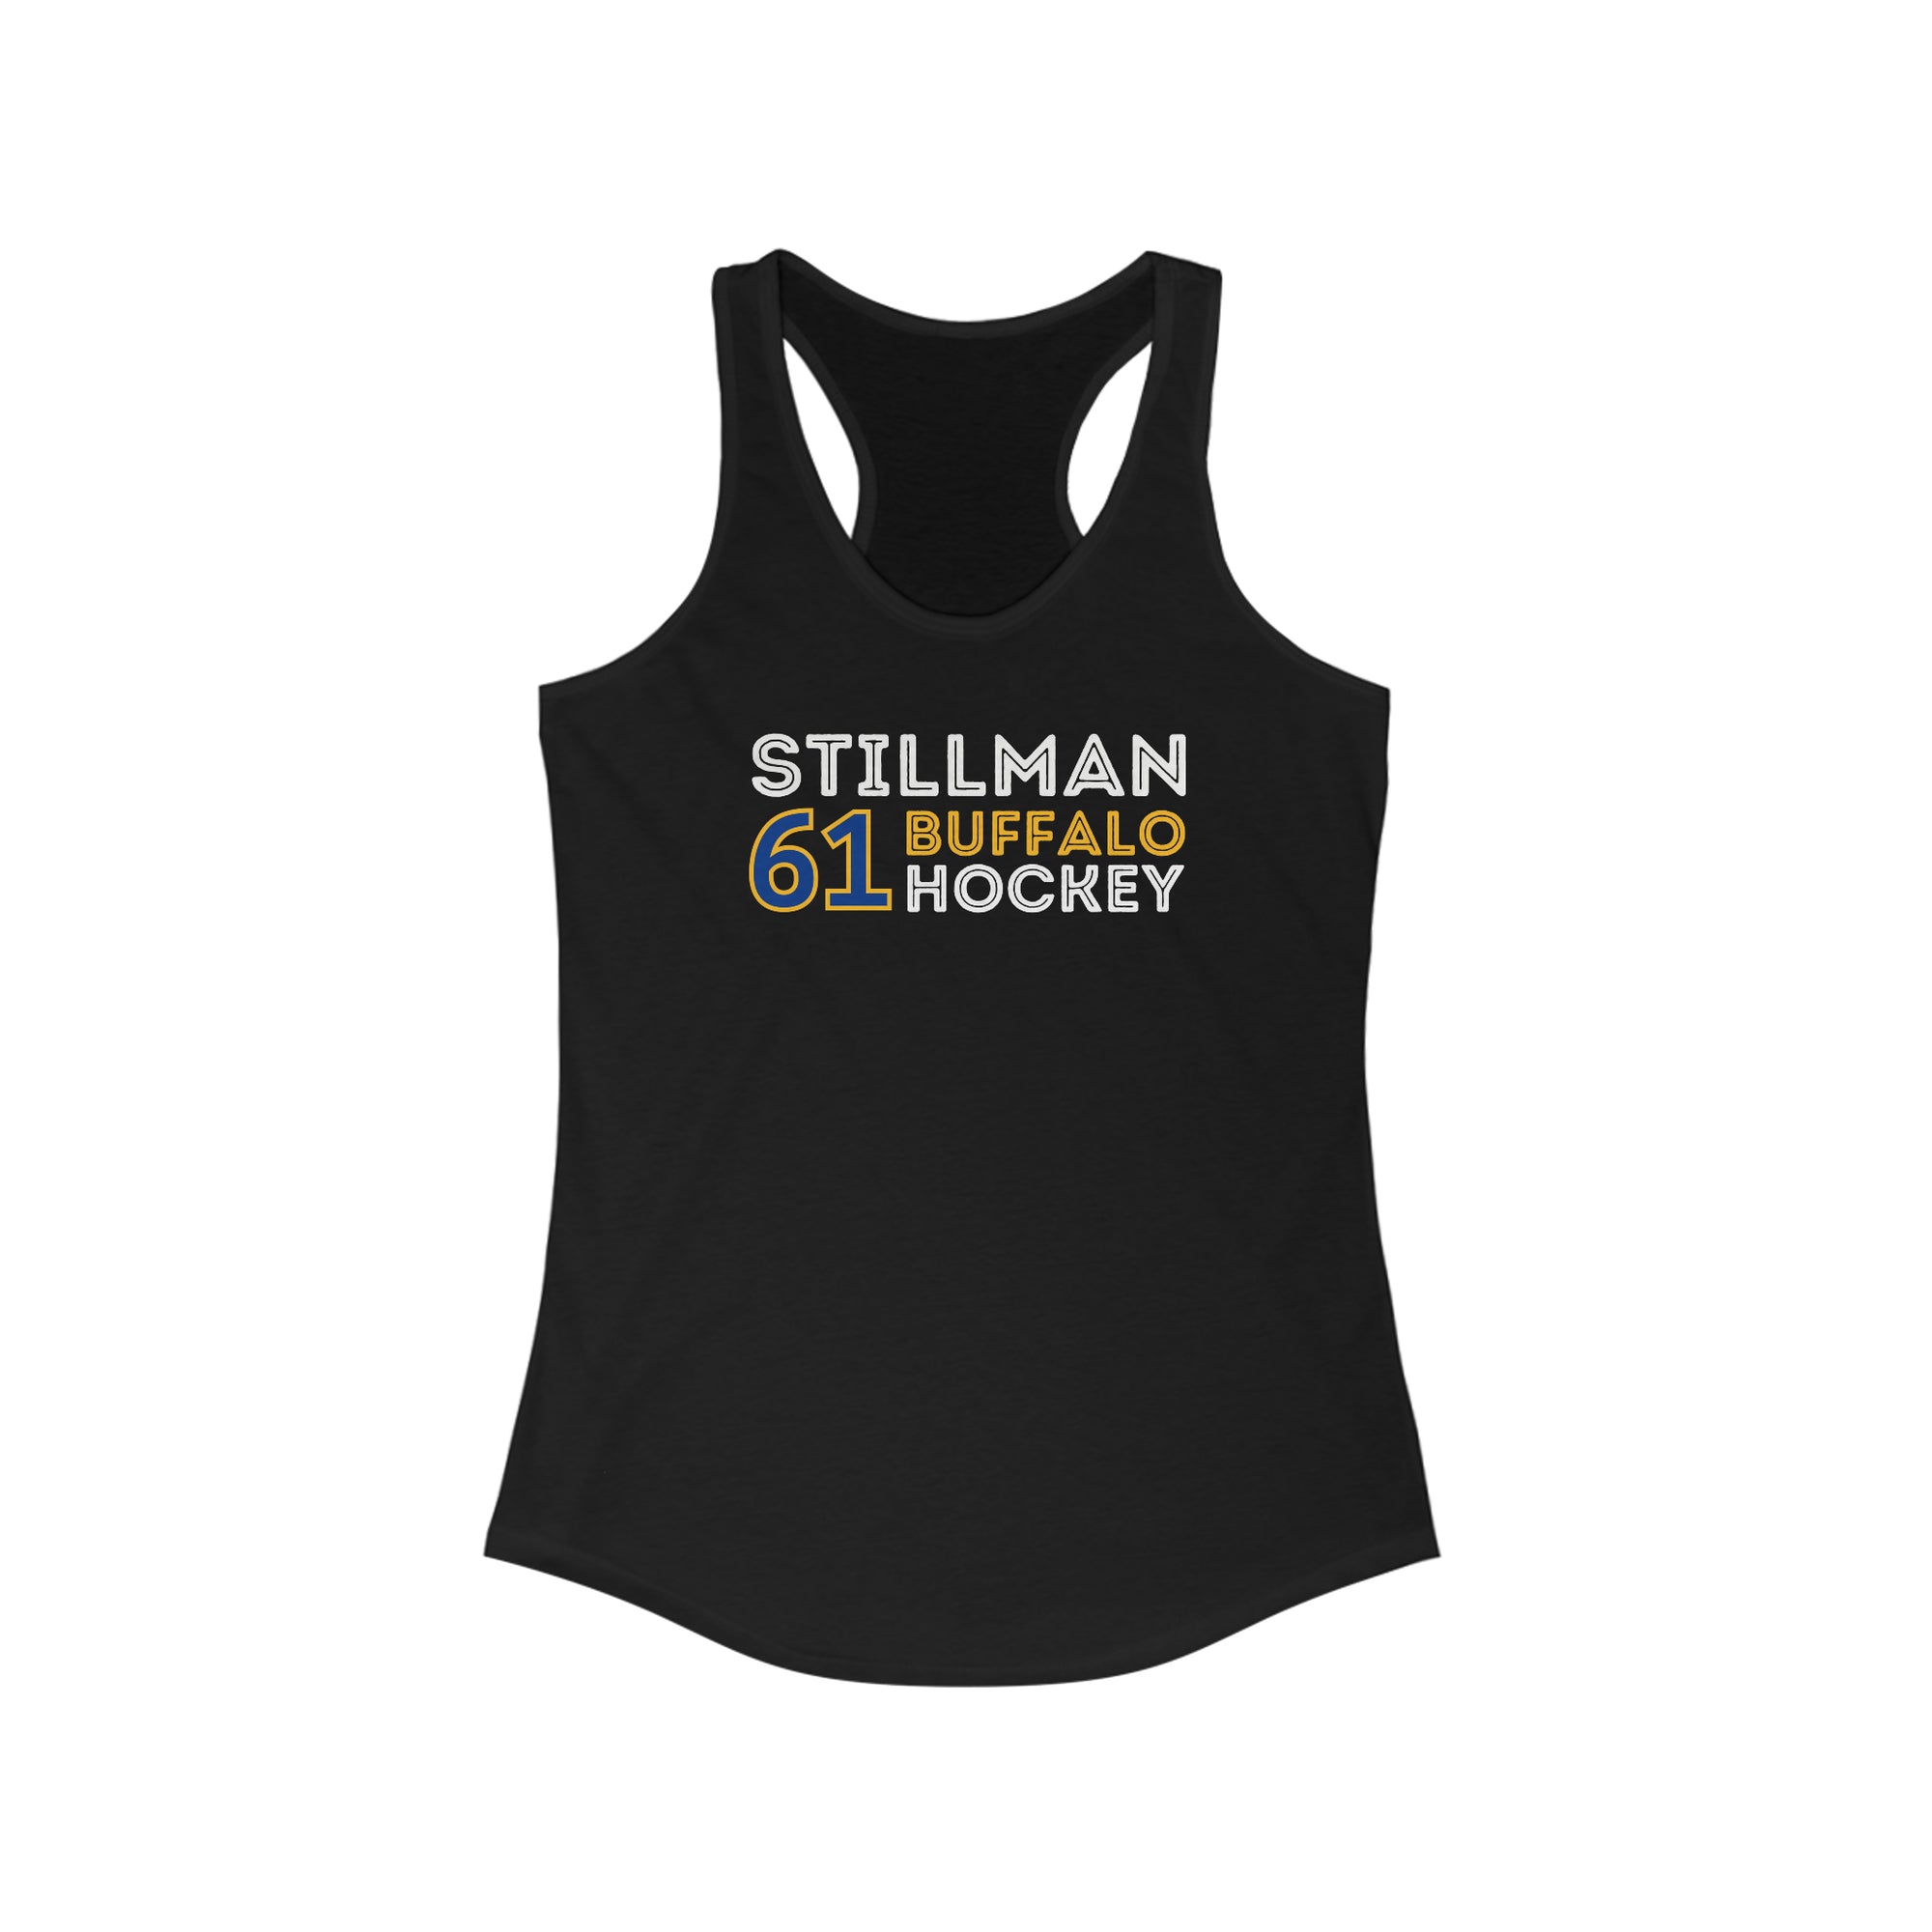 Stillman 61 Buffalo Hockey Grafitti Wall Design Women's Ideal Racerback Tank Top